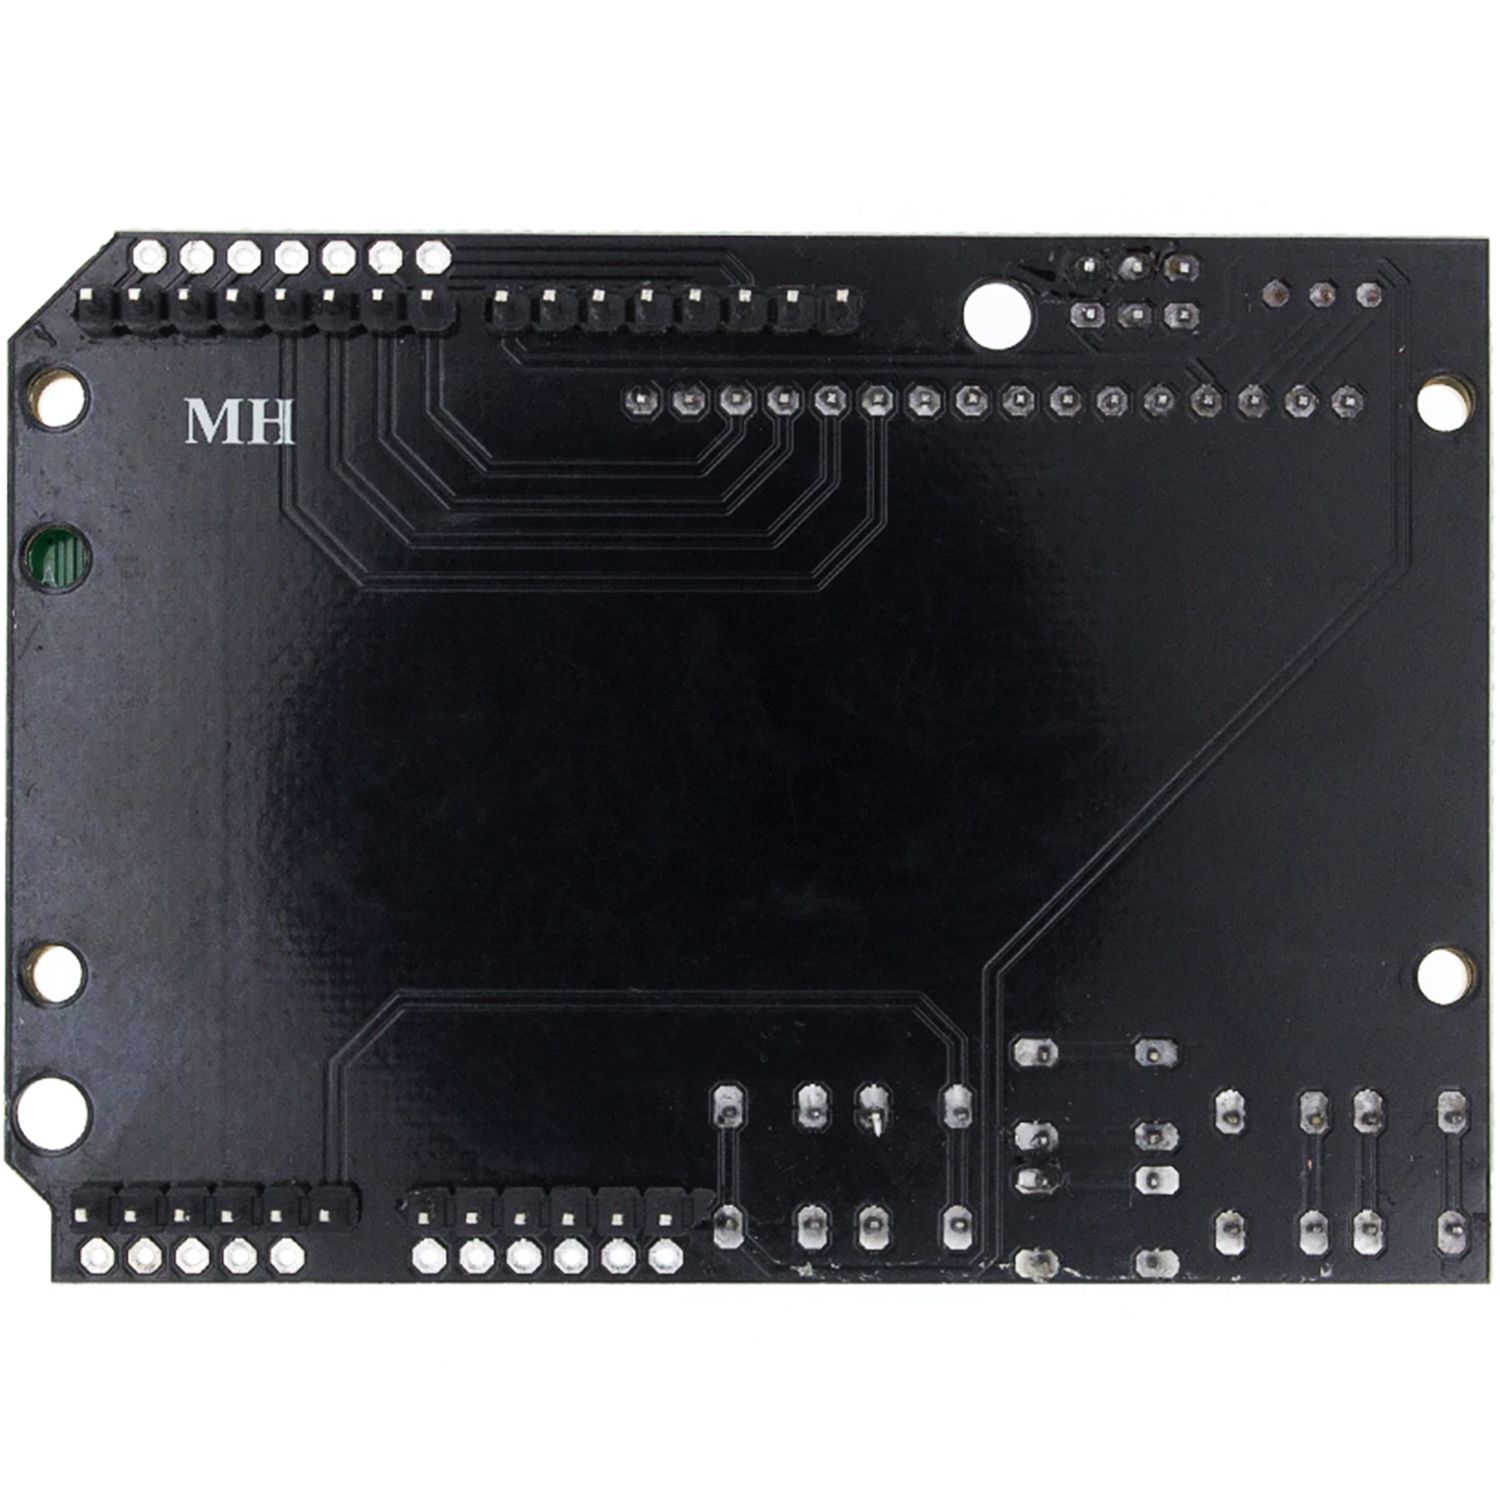 Модуль Keypad Shield с LCD дисплеем 1602 I2C